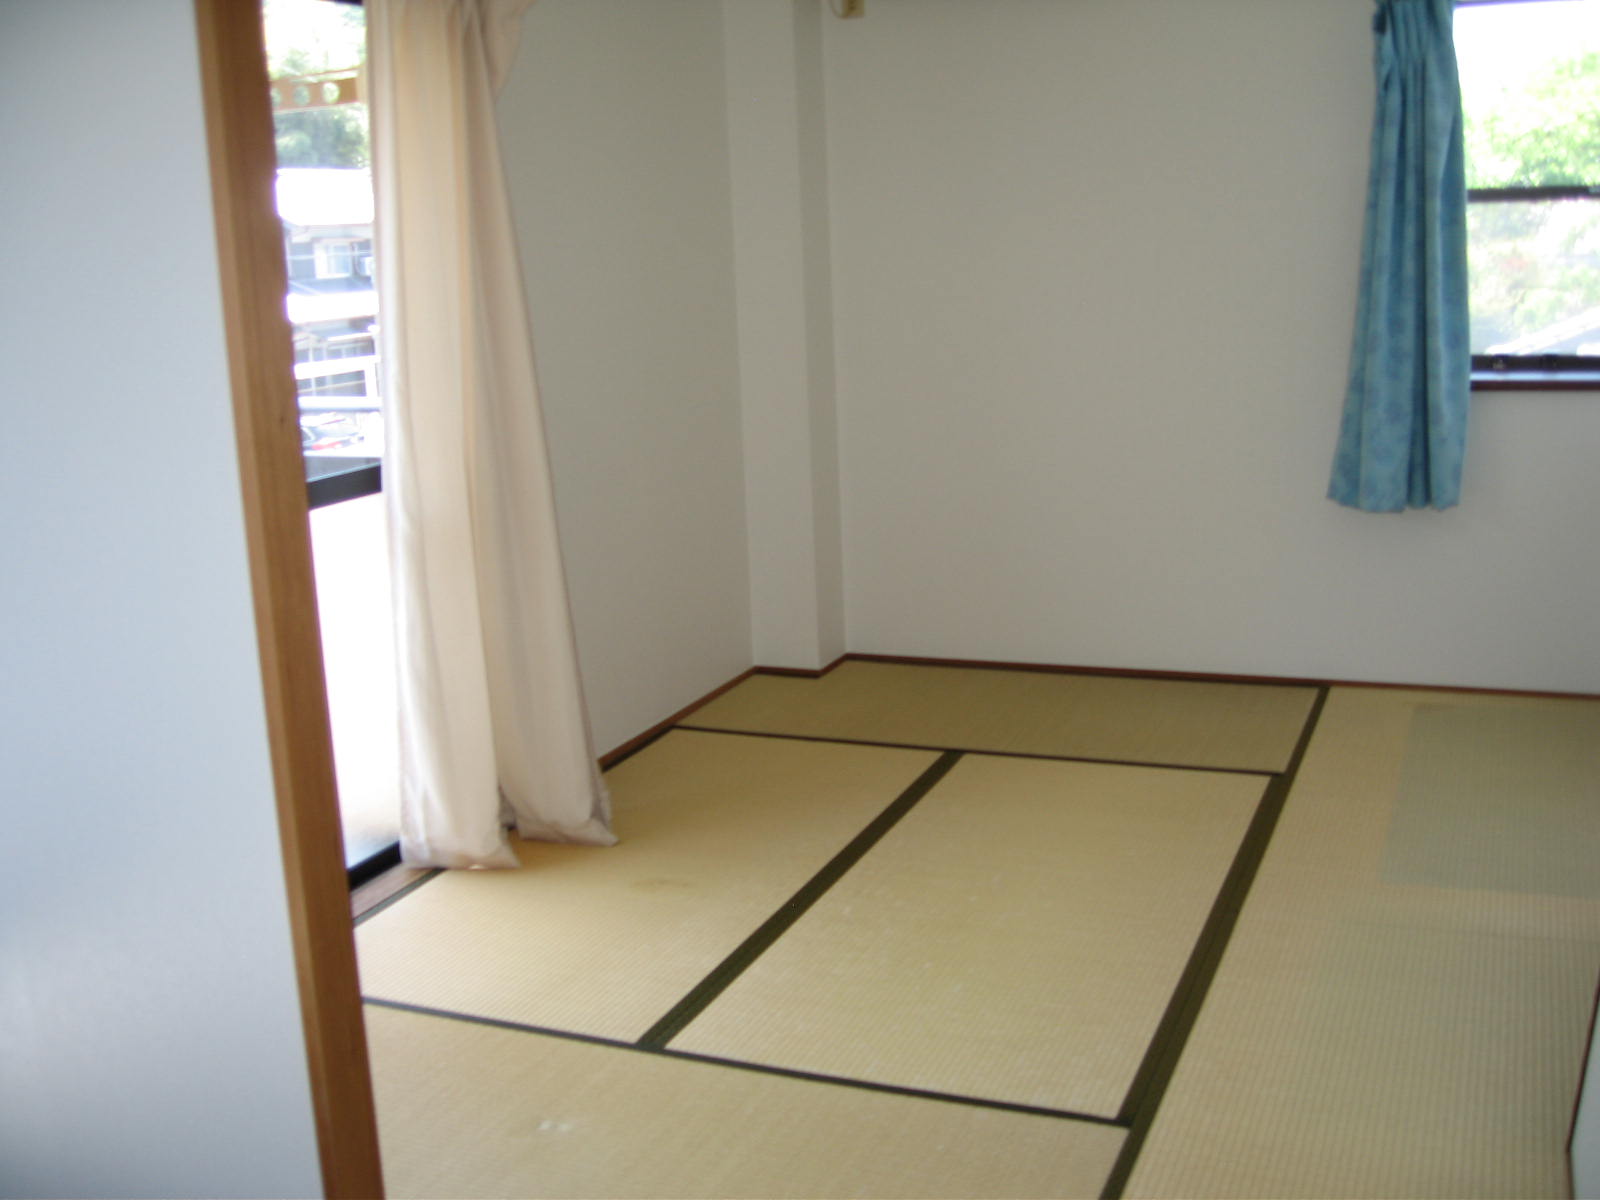 Living and room. Veranda side Japanese-style room